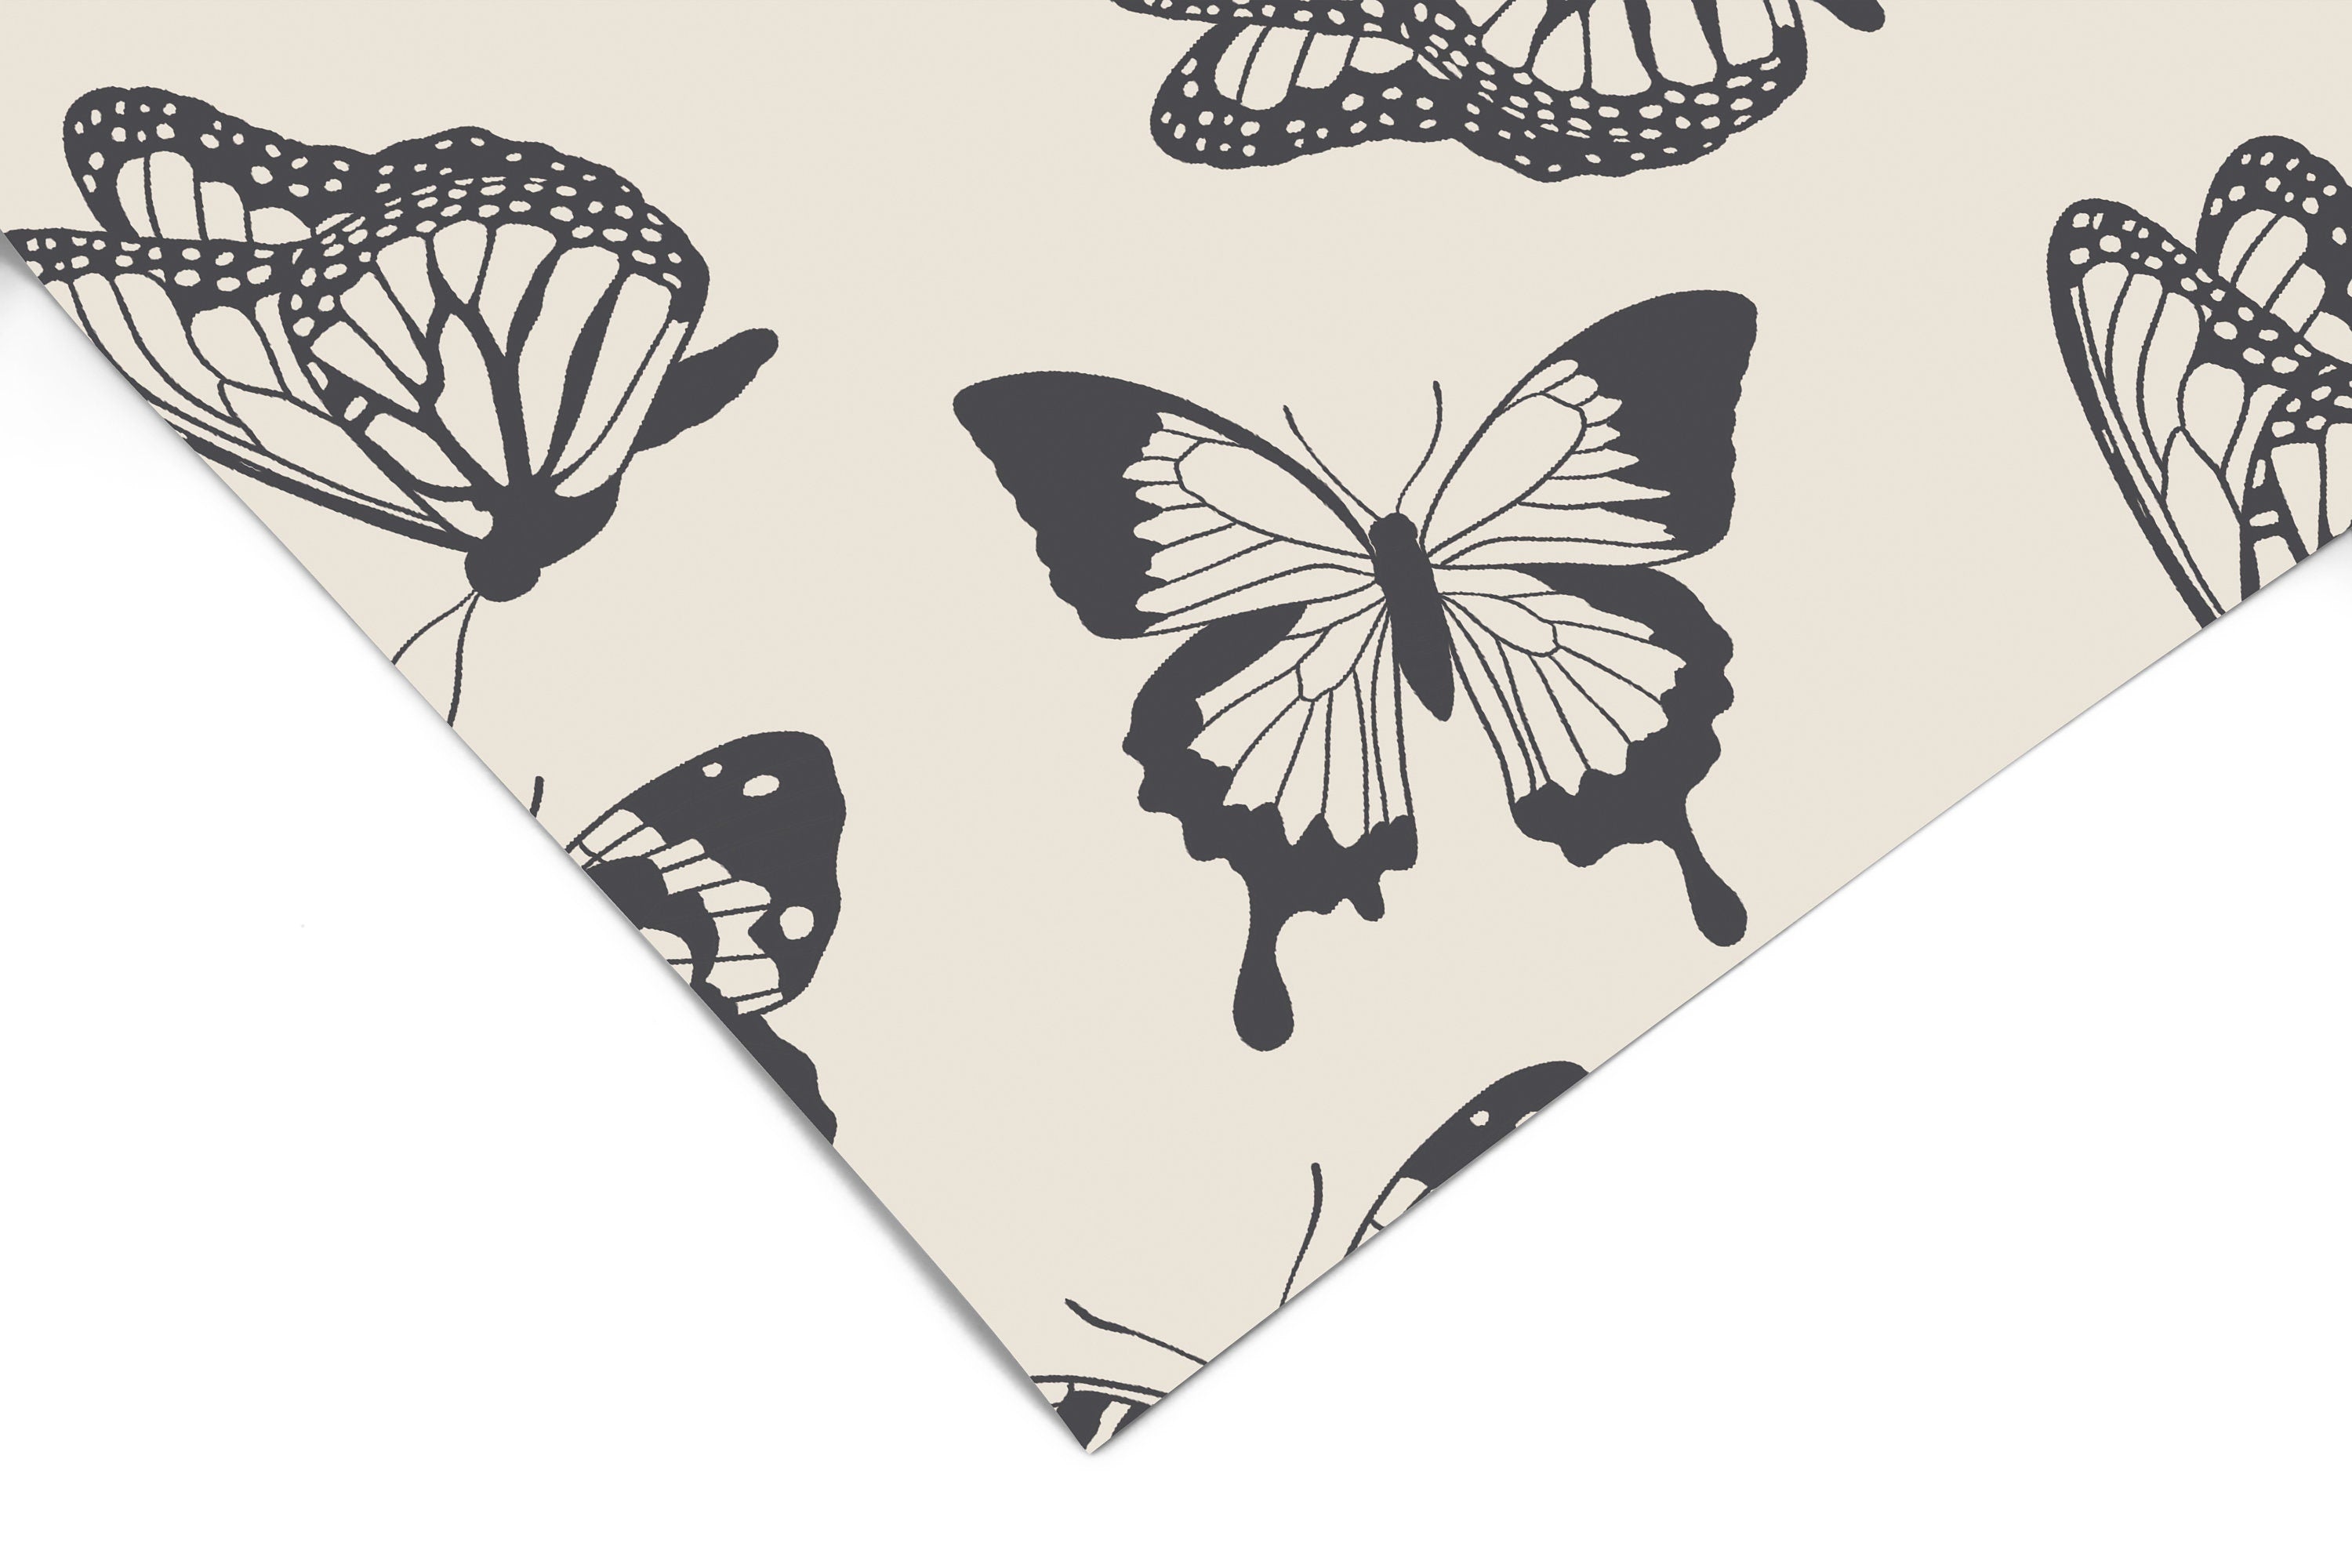 Butterfly Cream Black Wallpaper | Girls Nursery Wallpaper | Kids Wallpaper | Childrens Wallpaper | Peel Stick Removable Wallpaper | 3839 - JamesAndColors